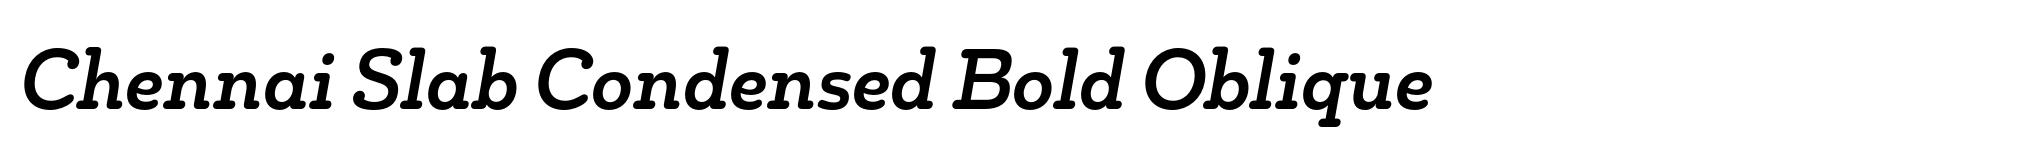 Chennai Slab Condensed Bold Oblique image